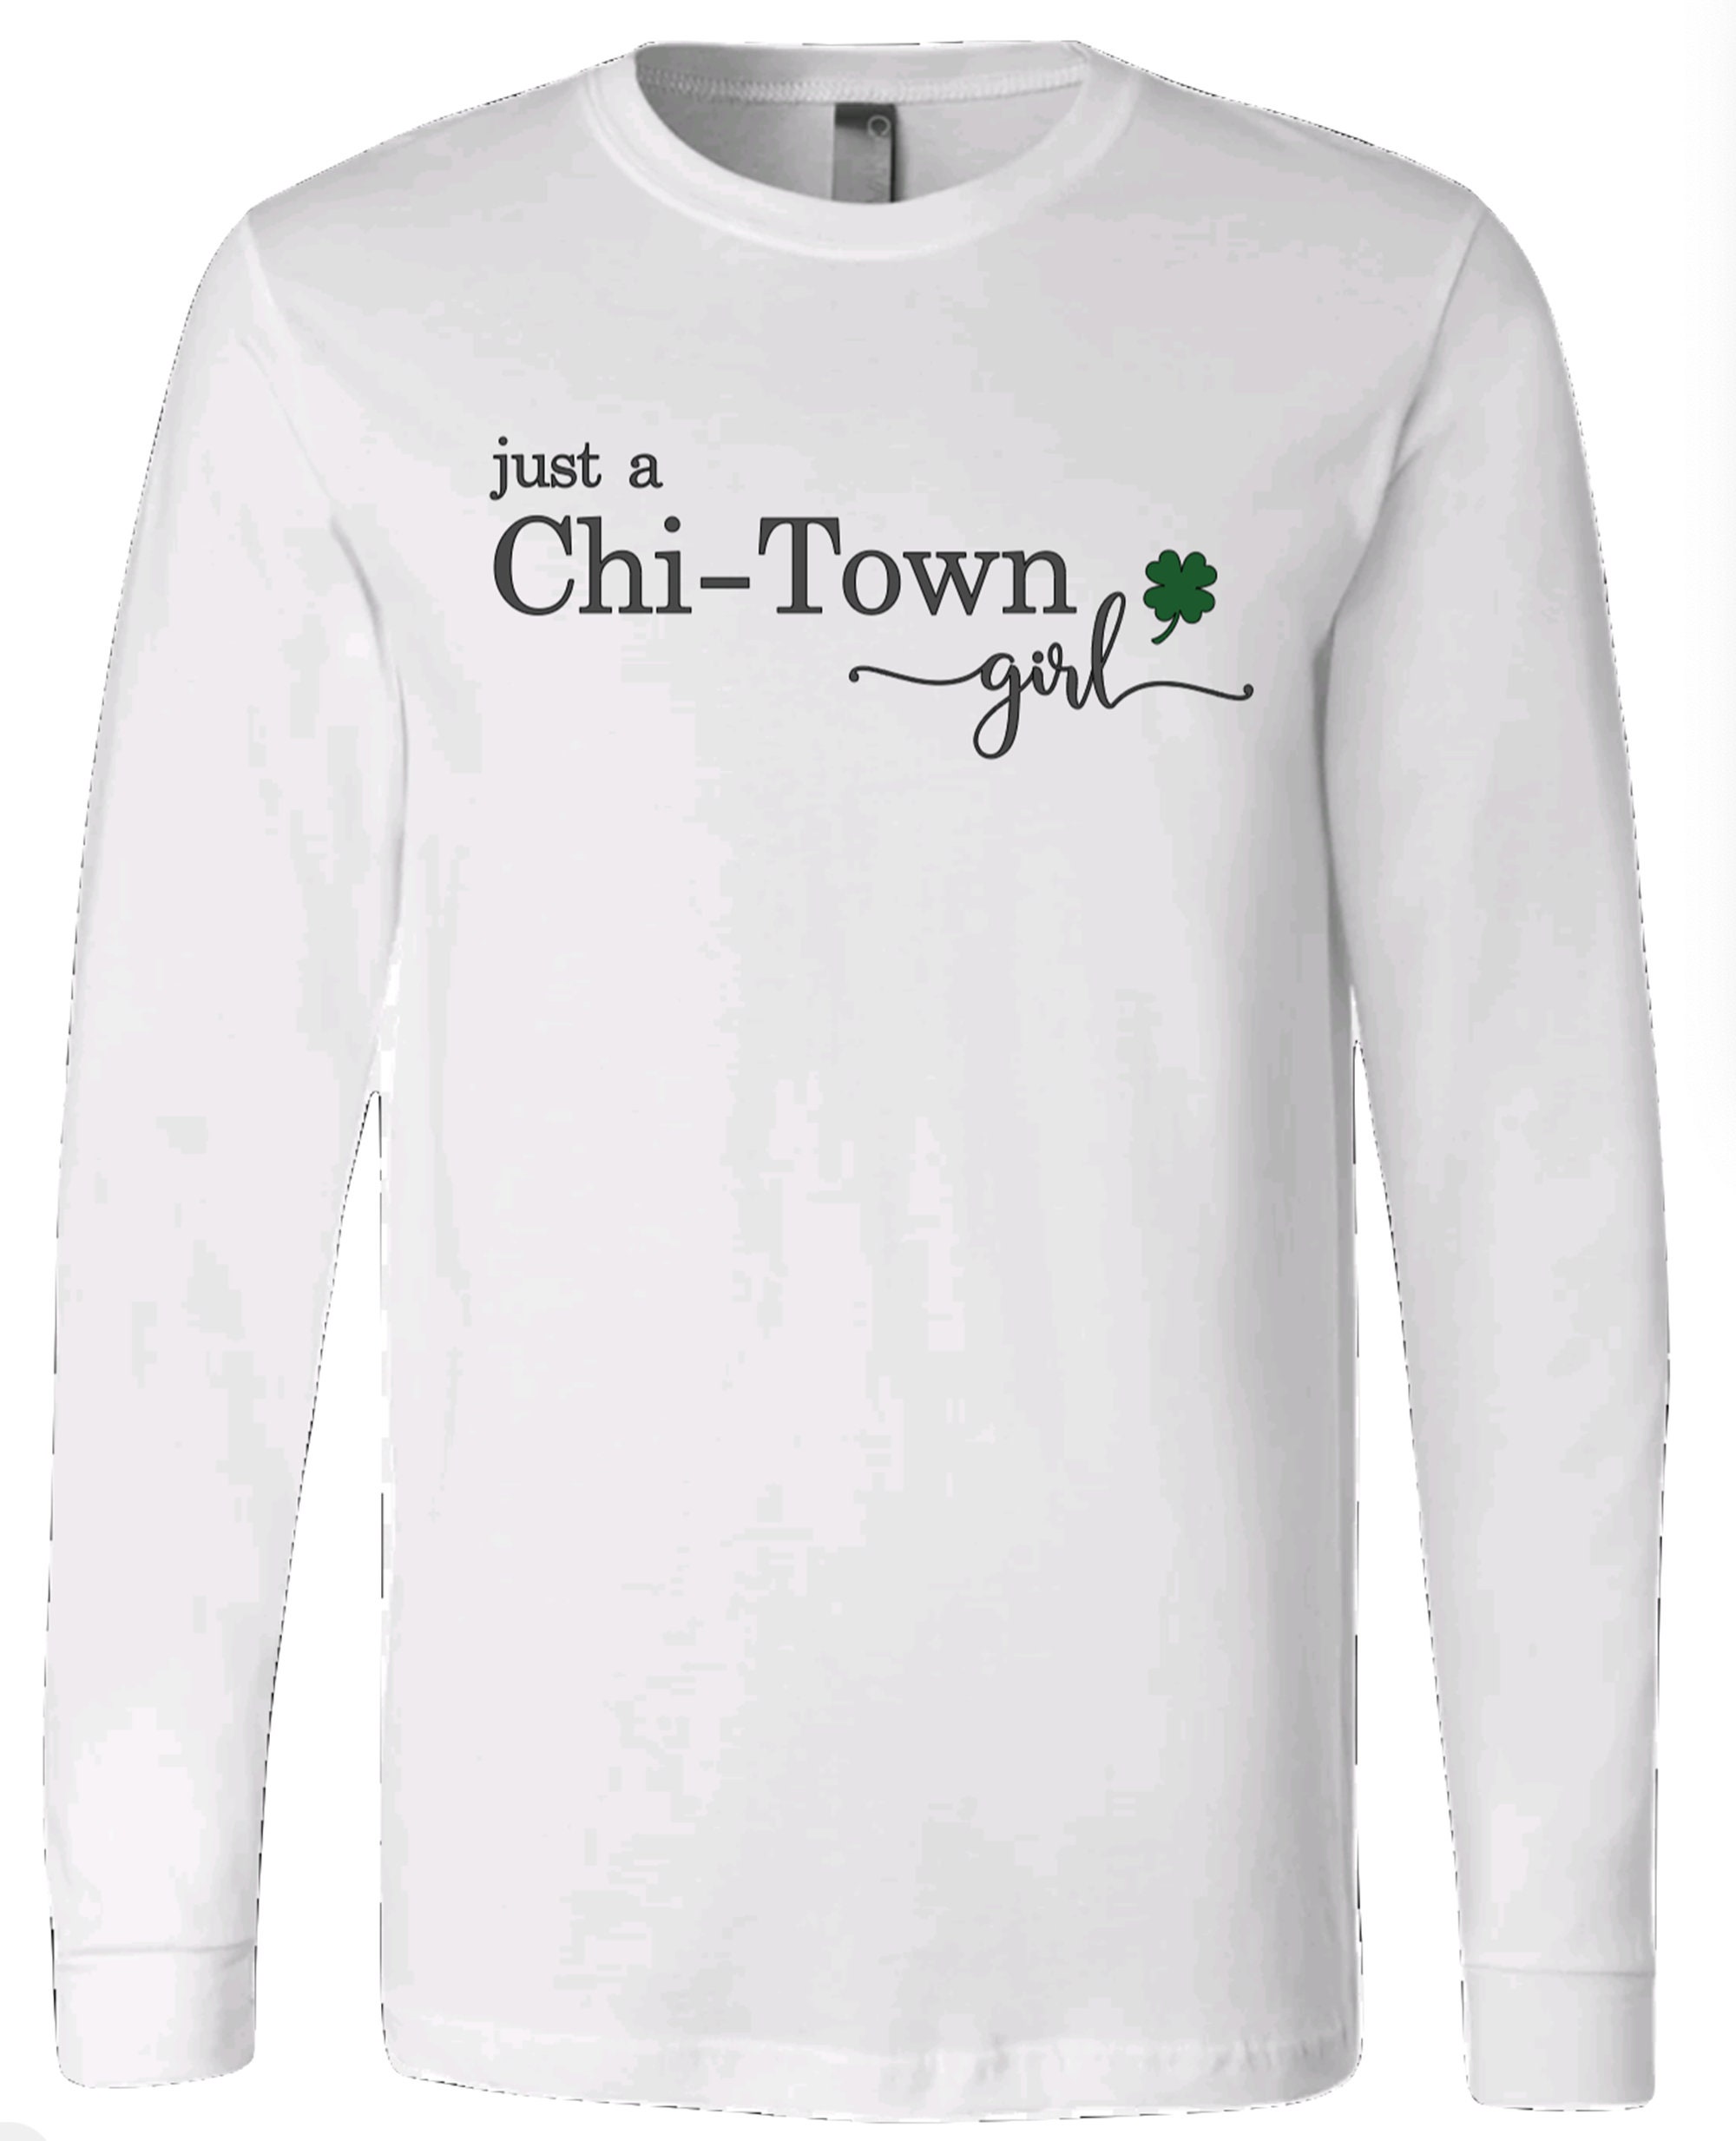 CHI Baseball Hoodie - Chitown Clothing